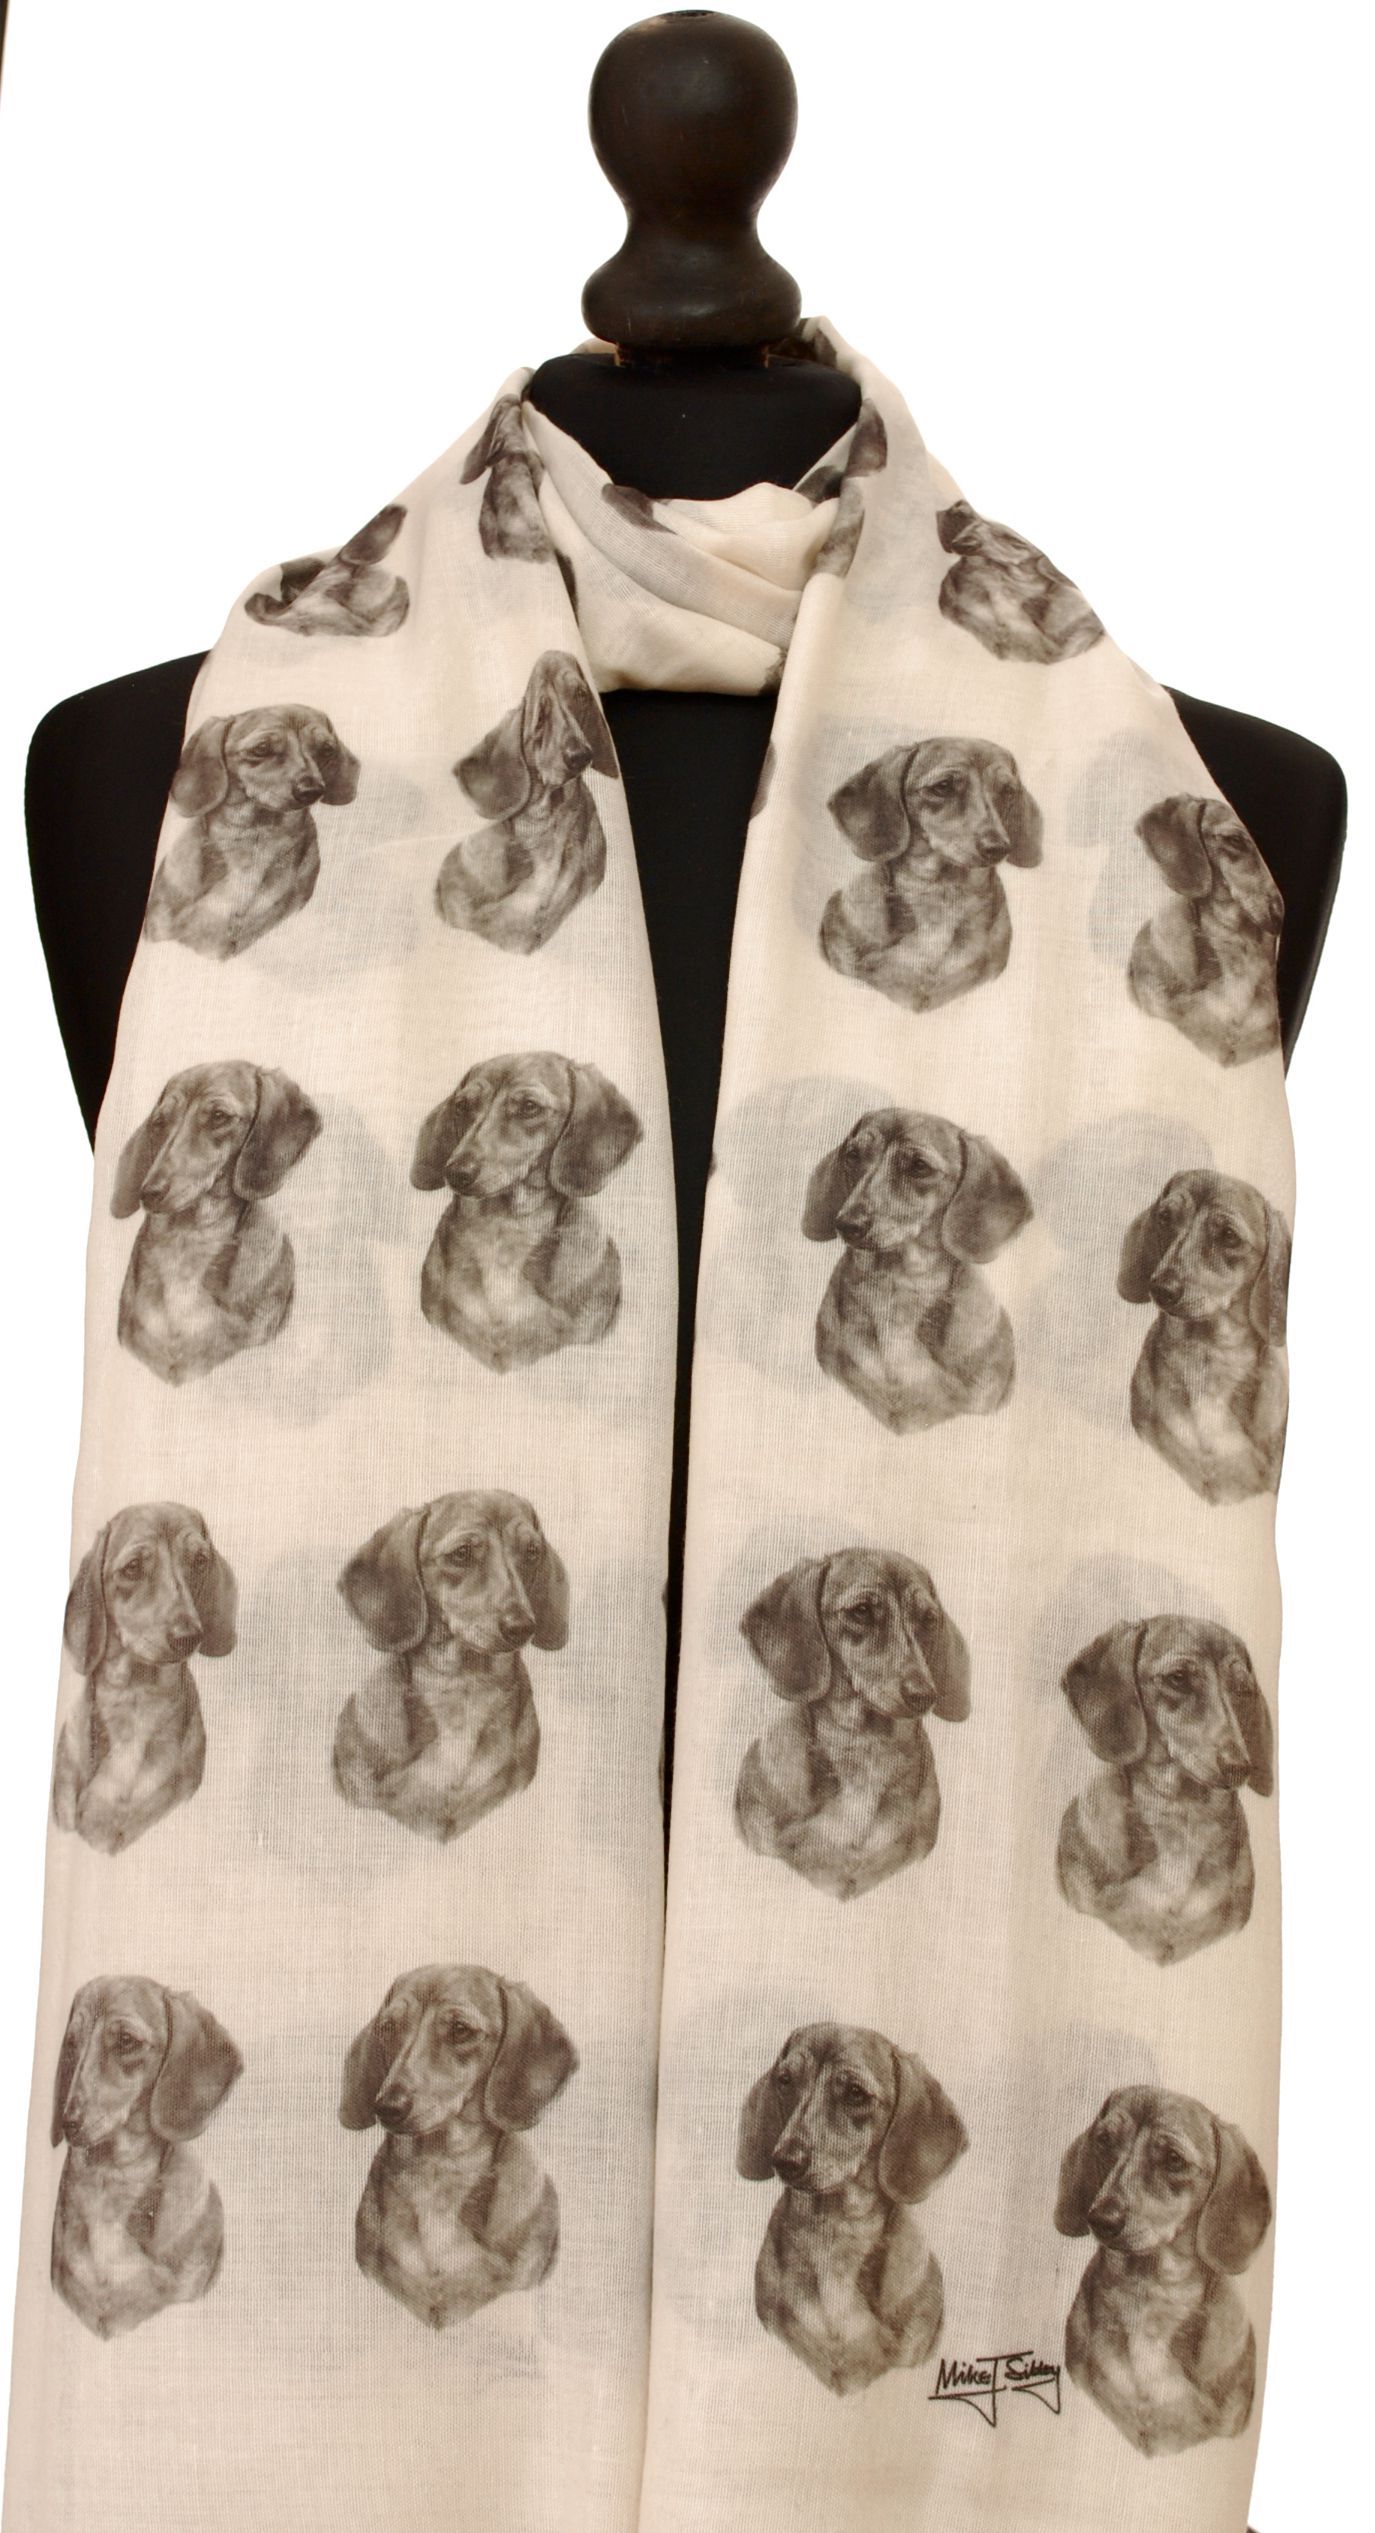 Mike Sibley Dachshund licensed design ladies fashion scarf